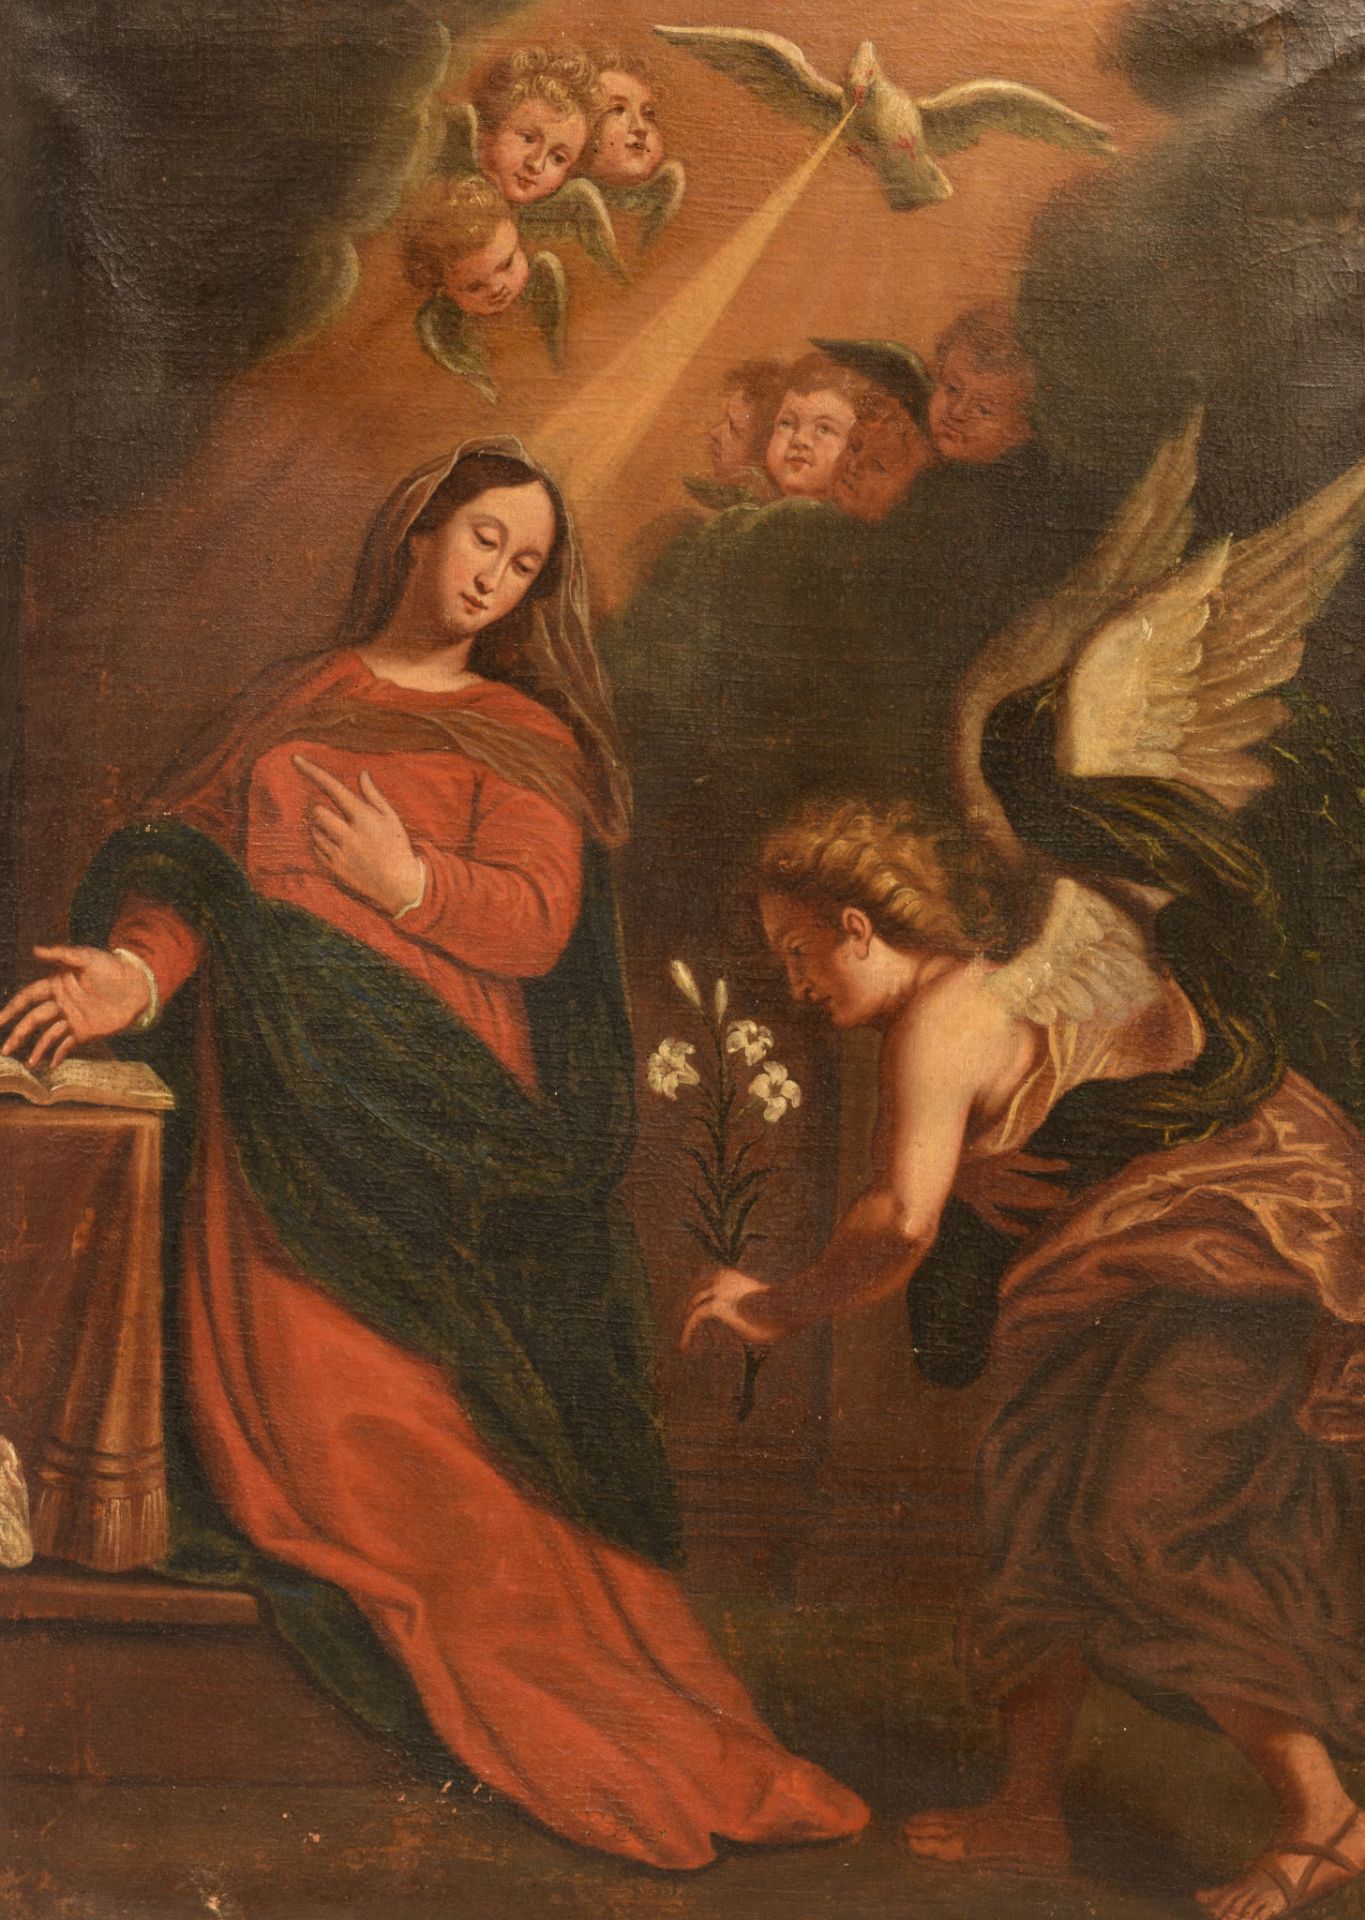 The Annunciation, 18thC, oil on canvas, 77 x 107 cm